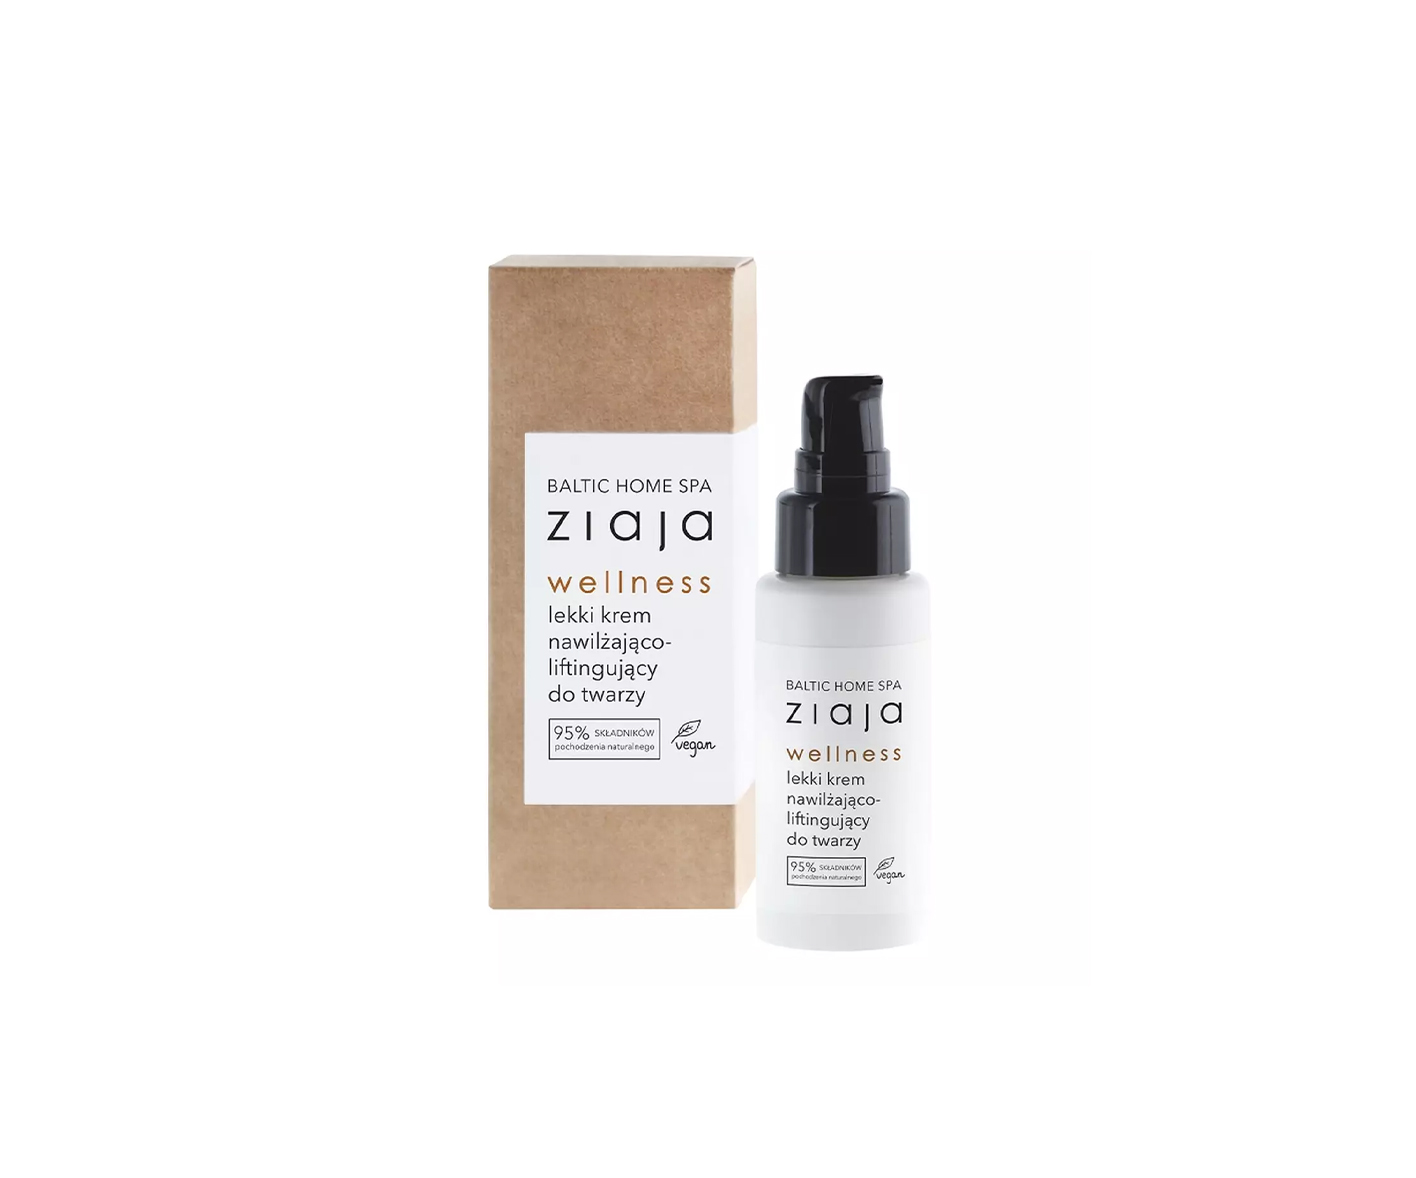 Ziaja, Baltic Home Spa Wellnes, moisturizing and lifting face cream